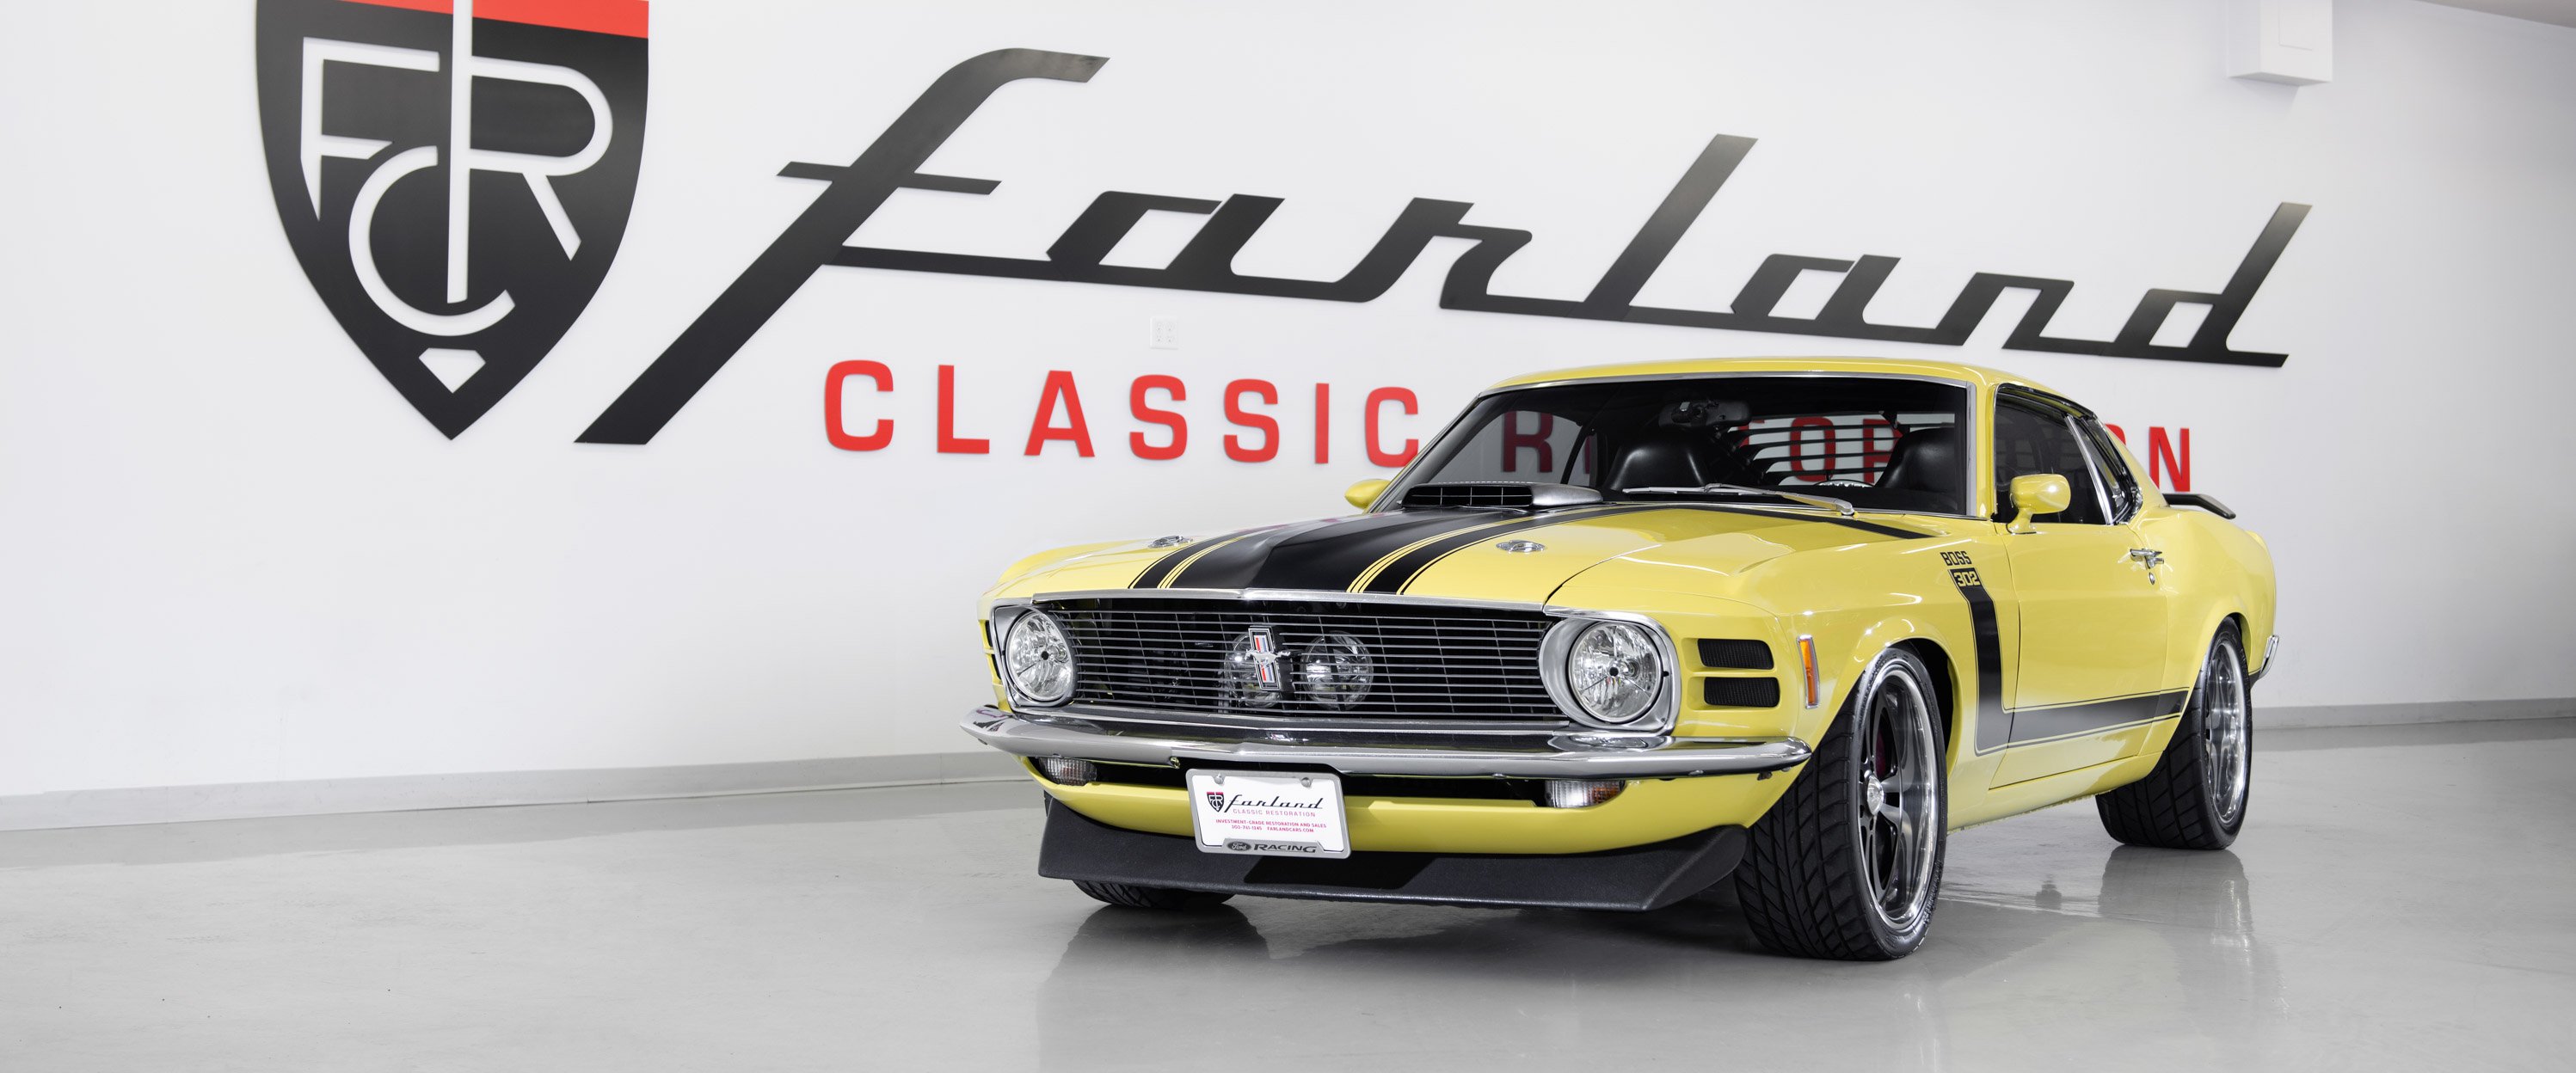 1970-Ford-Boss-Mustang-300-Yellowver2-slideshow-003@2x